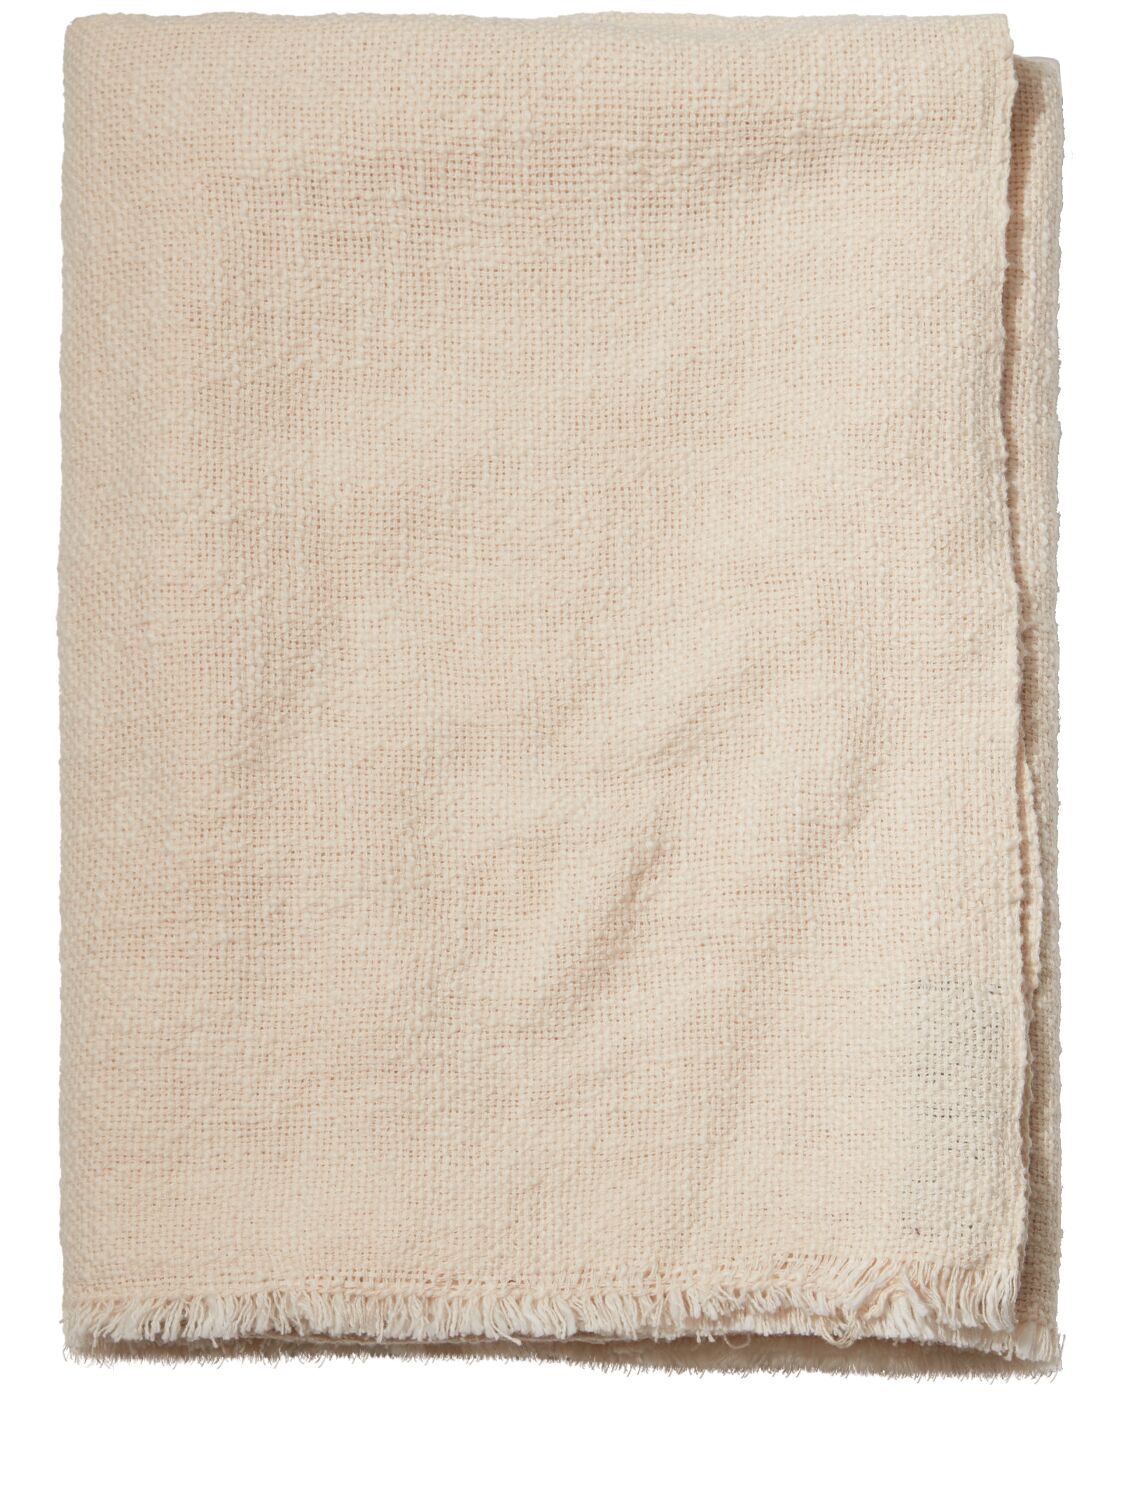 Handwoven Cotton Blanket Scarf